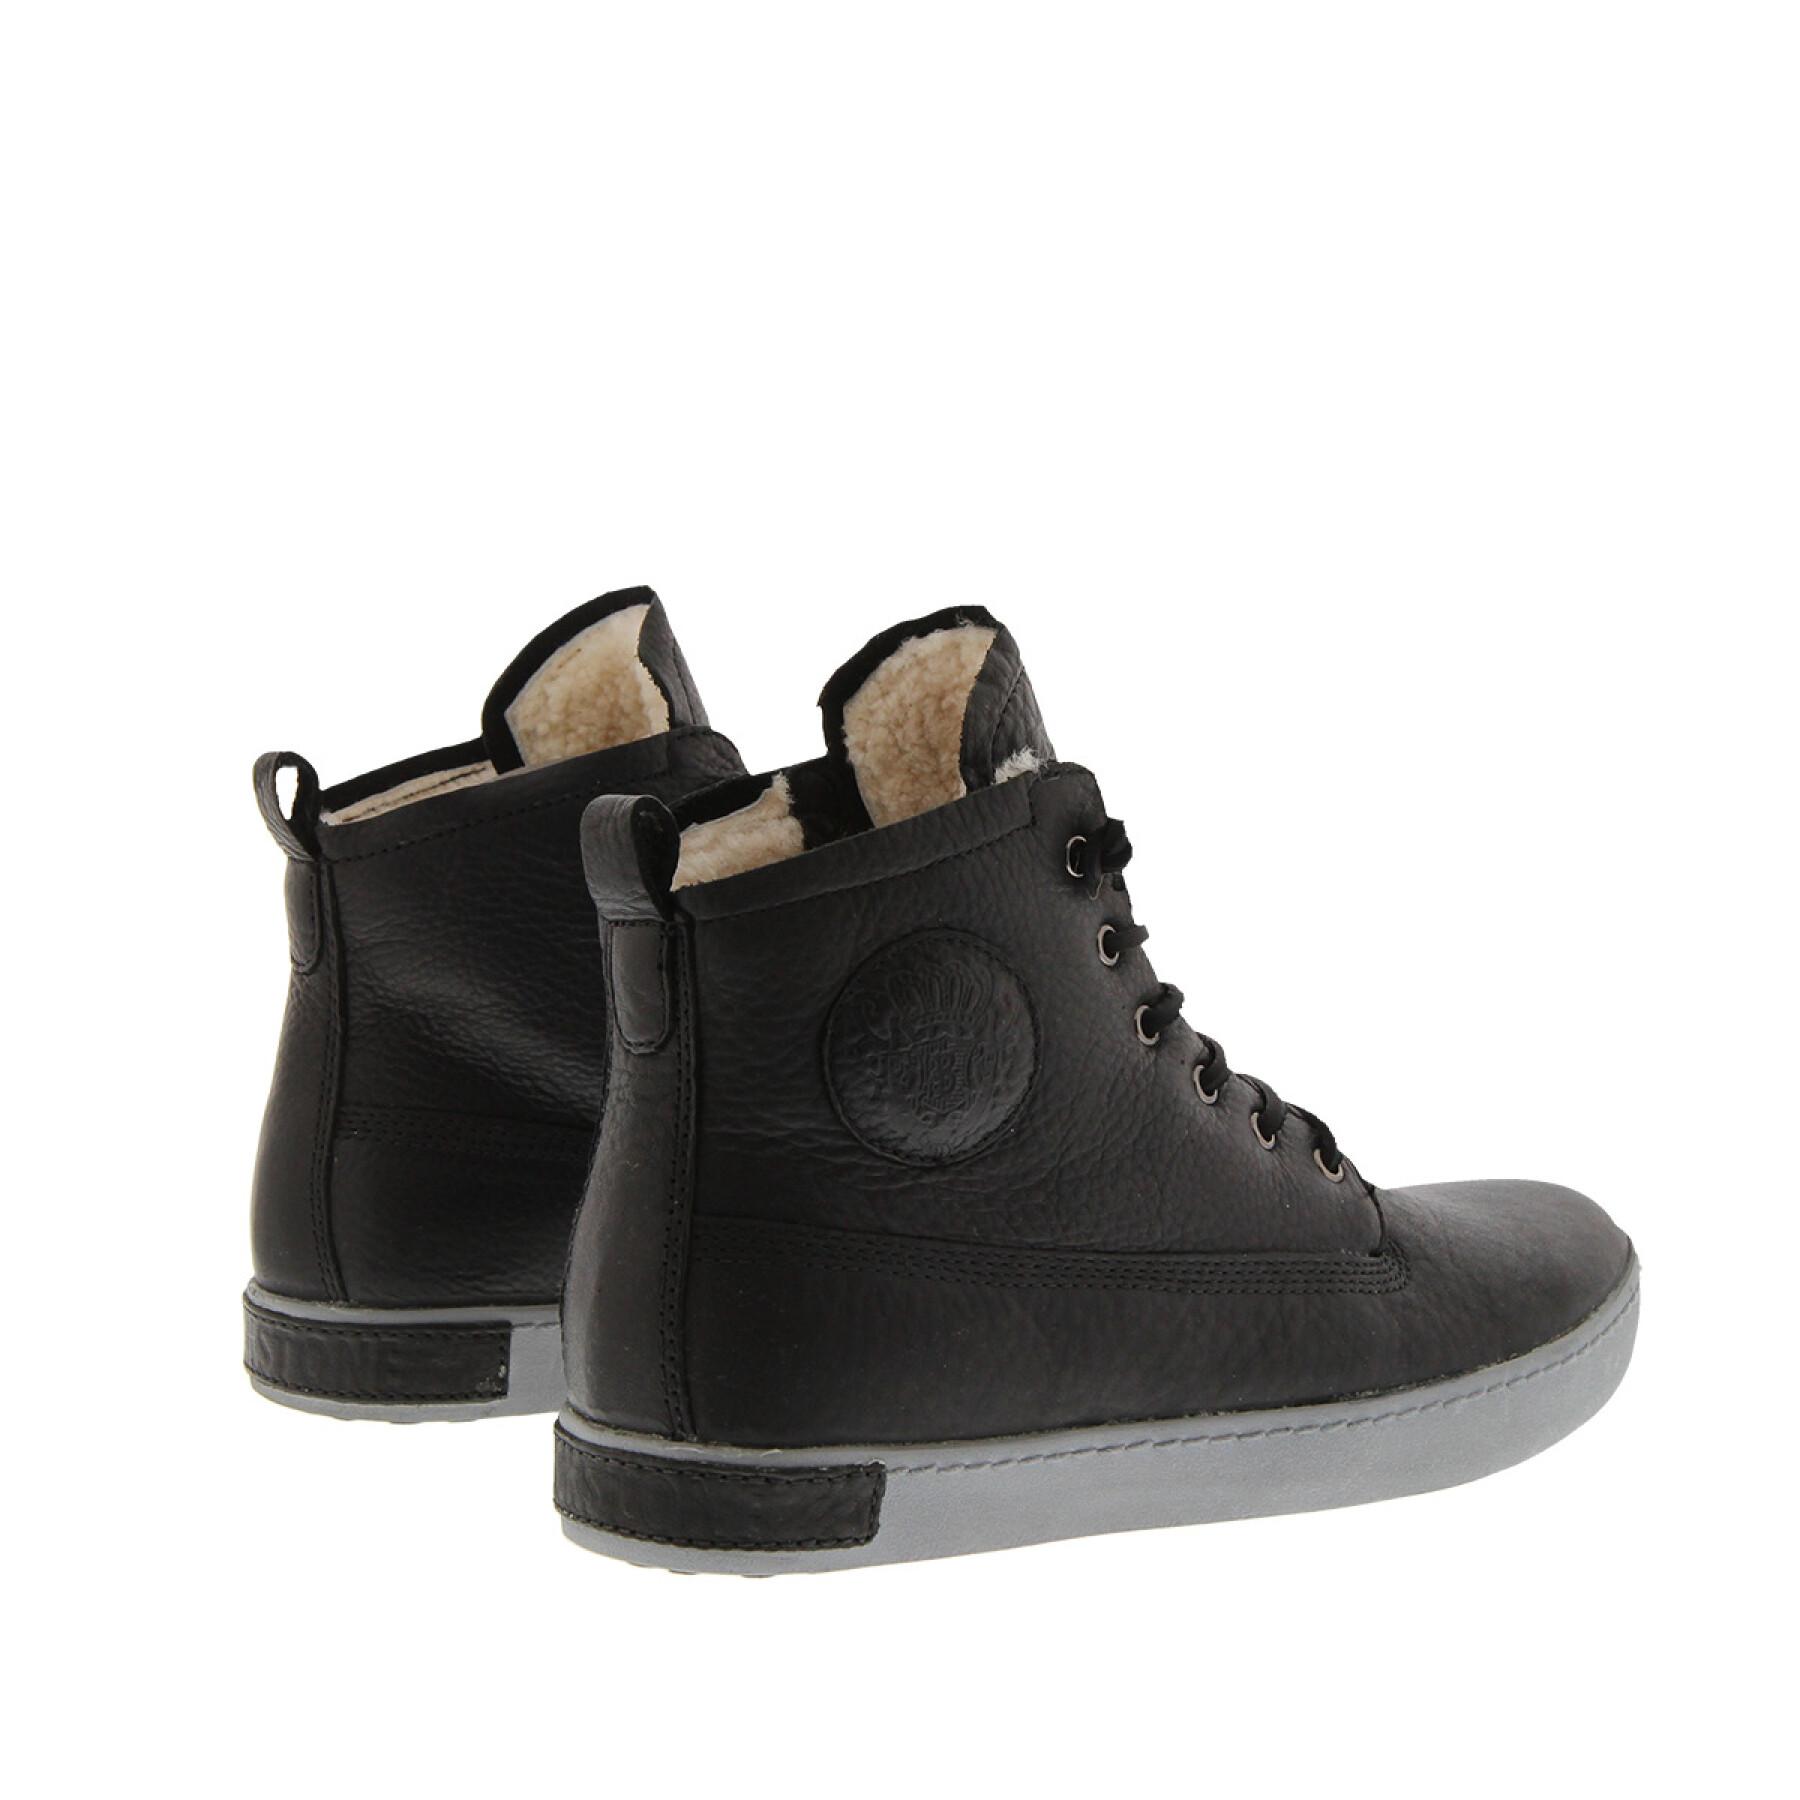 Chaussures Blackstone Original 6'' Boots - Fur